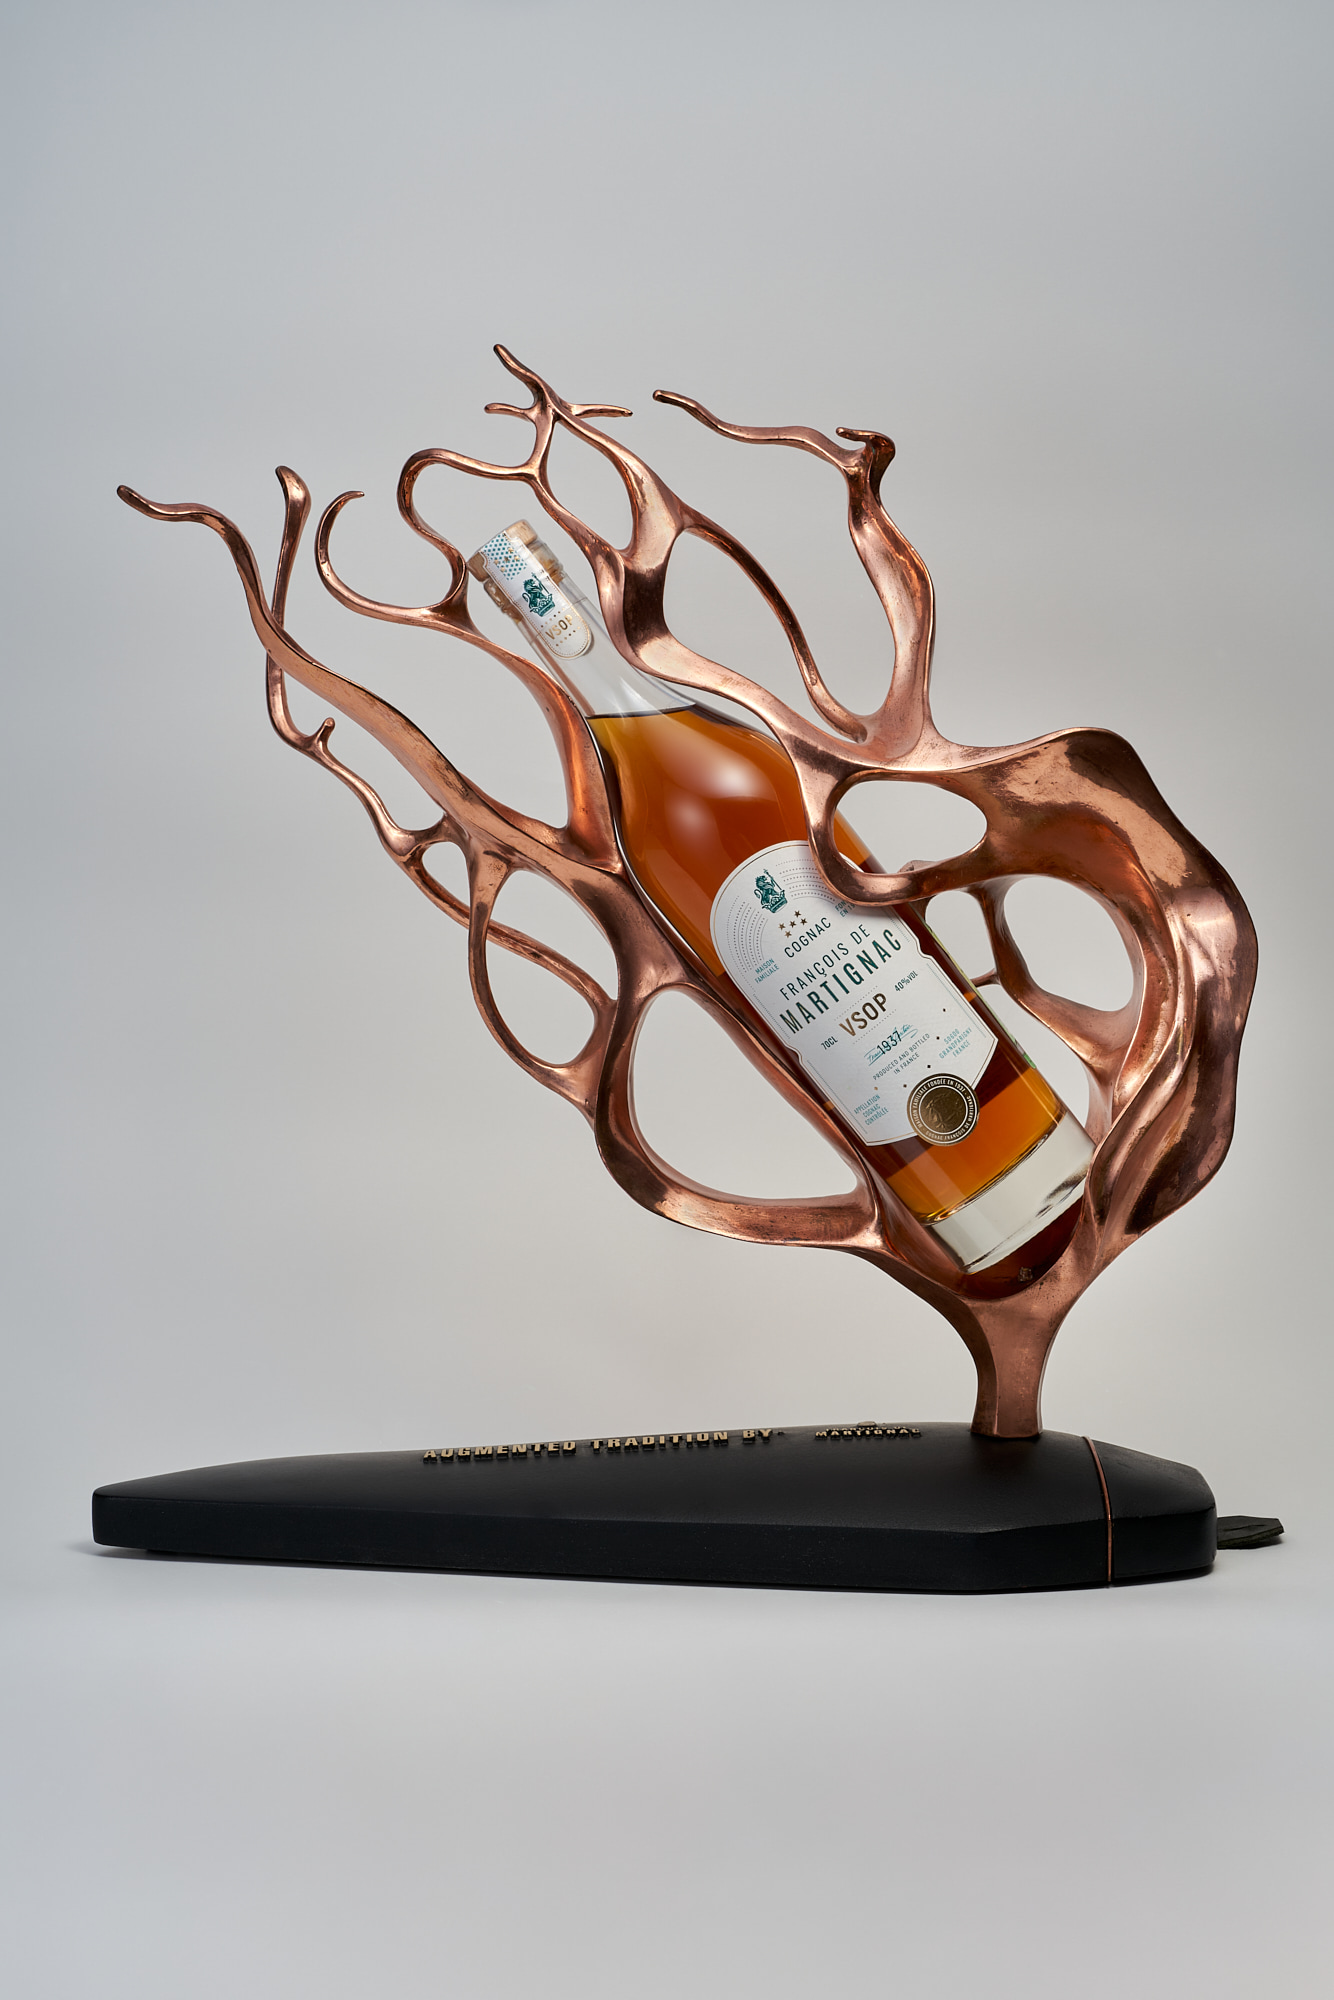 Ideologist Creates Series of Design Objects for François de Martignac Cognac Inspired by “Edge of World” Concept